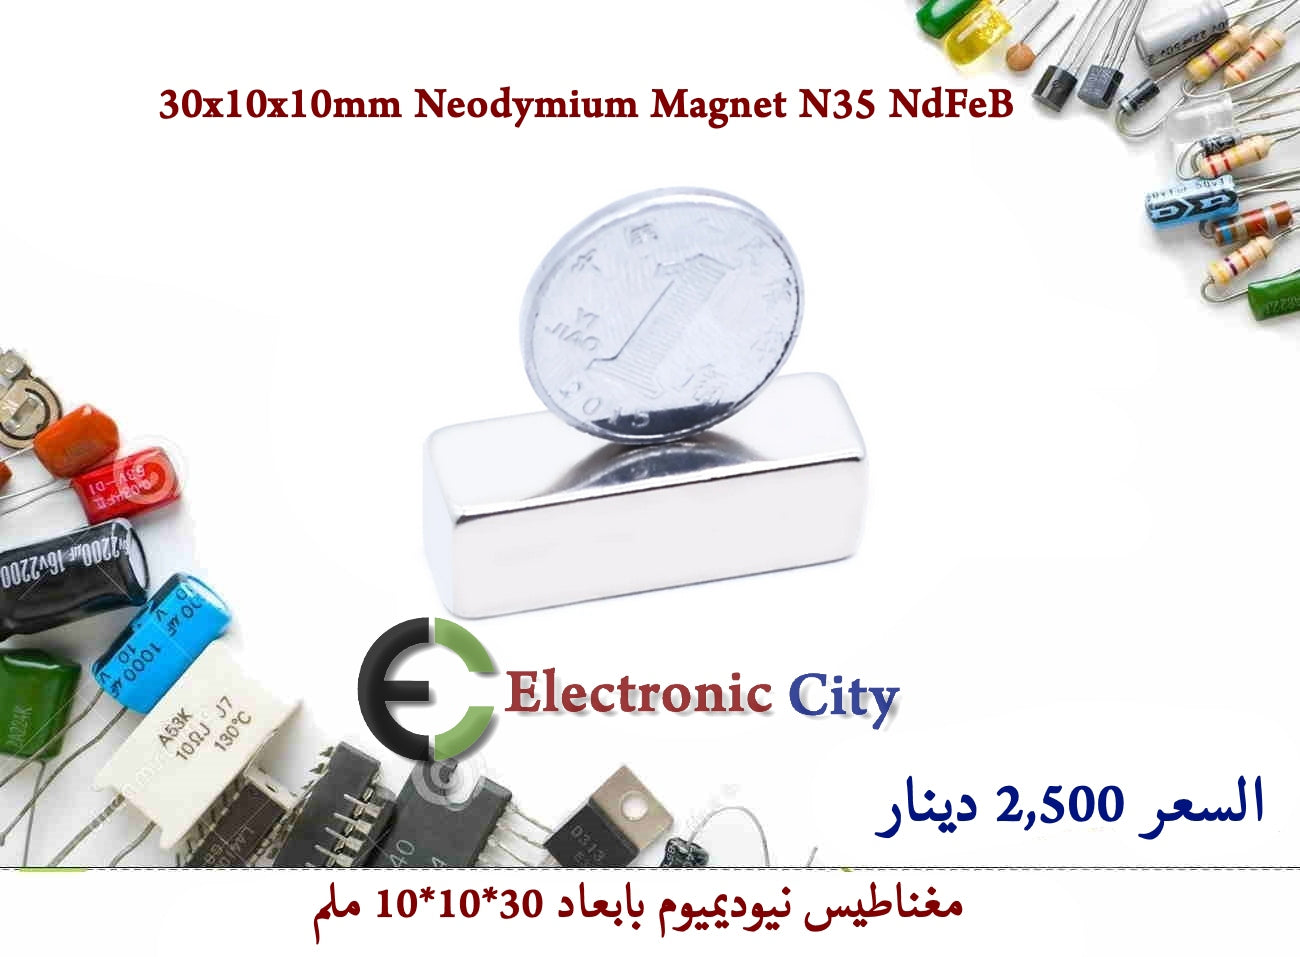 30x10x10mm Neodymium Magnet N35 NdFeB